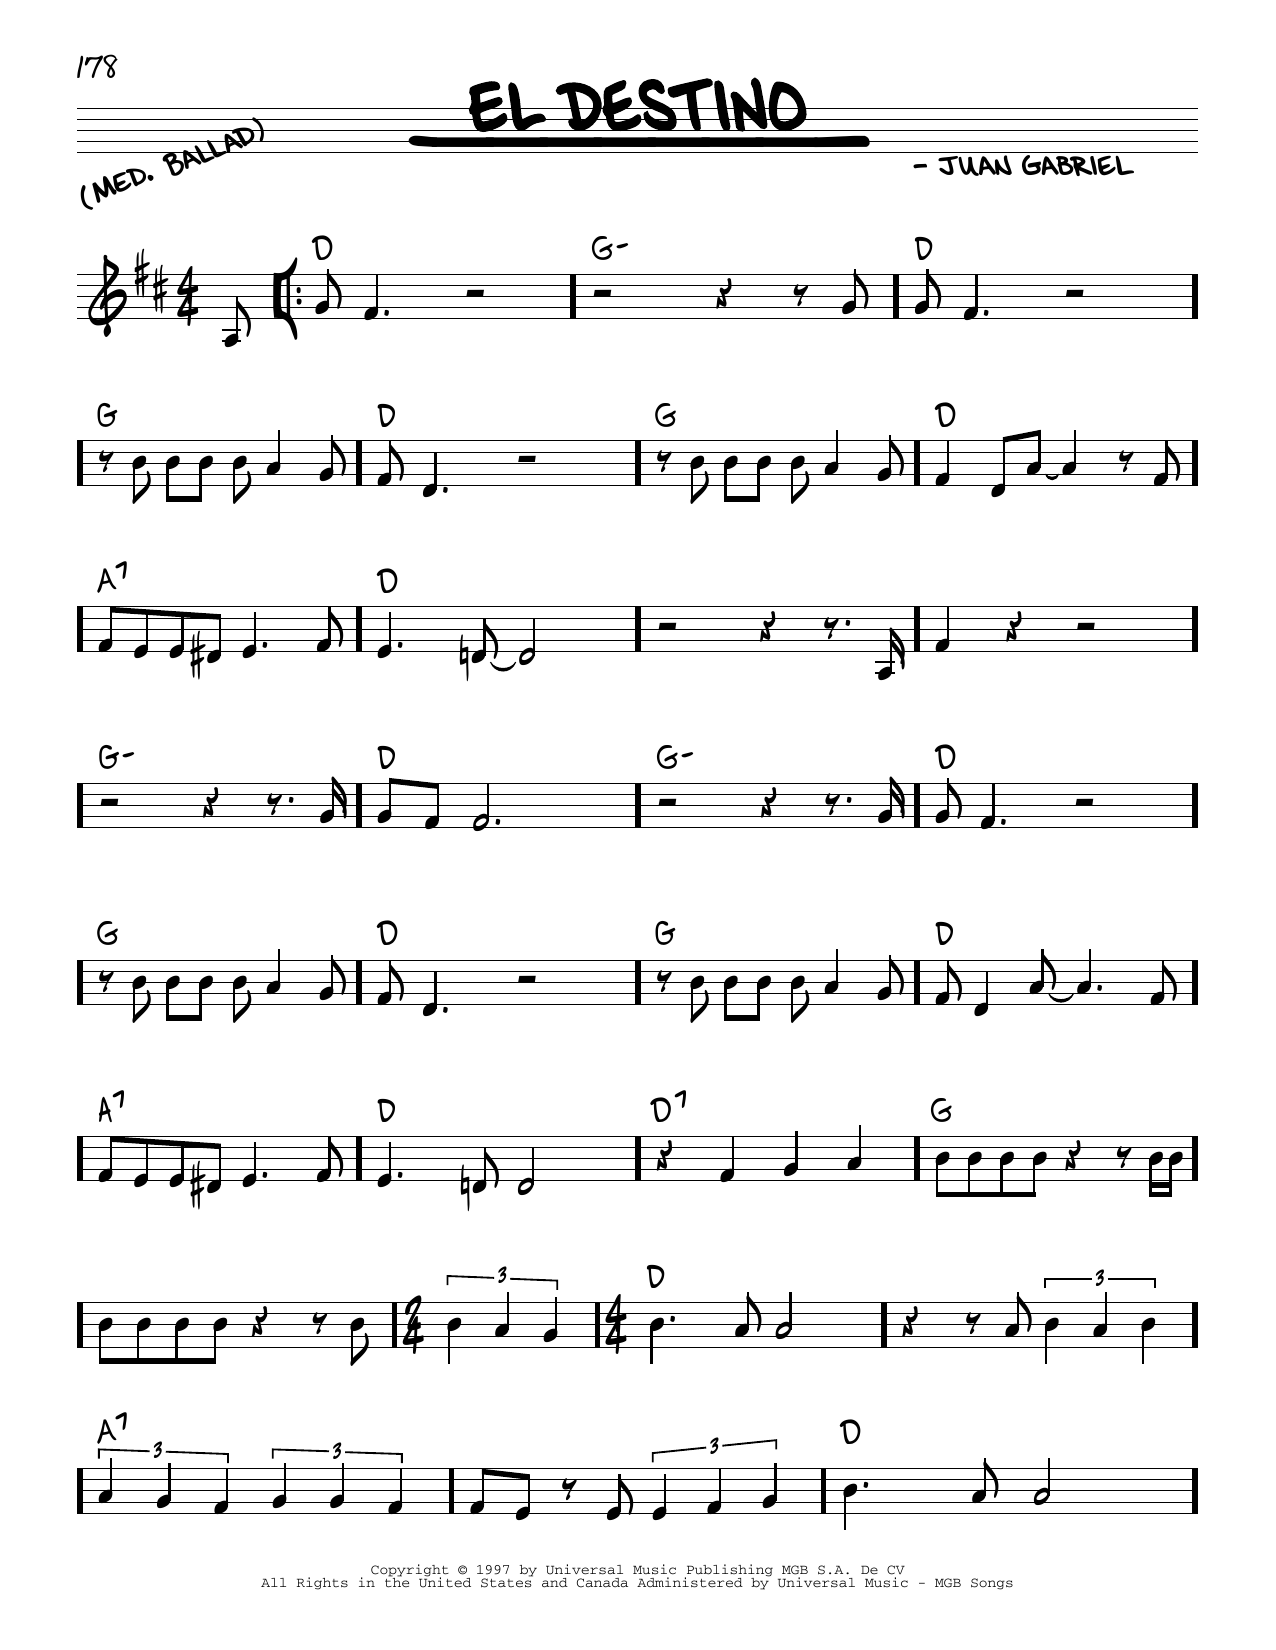 Juan Gabriel El Destino Sheet Music Notes & Chords for Real Book – Melody & Chords - Download or Print PDF